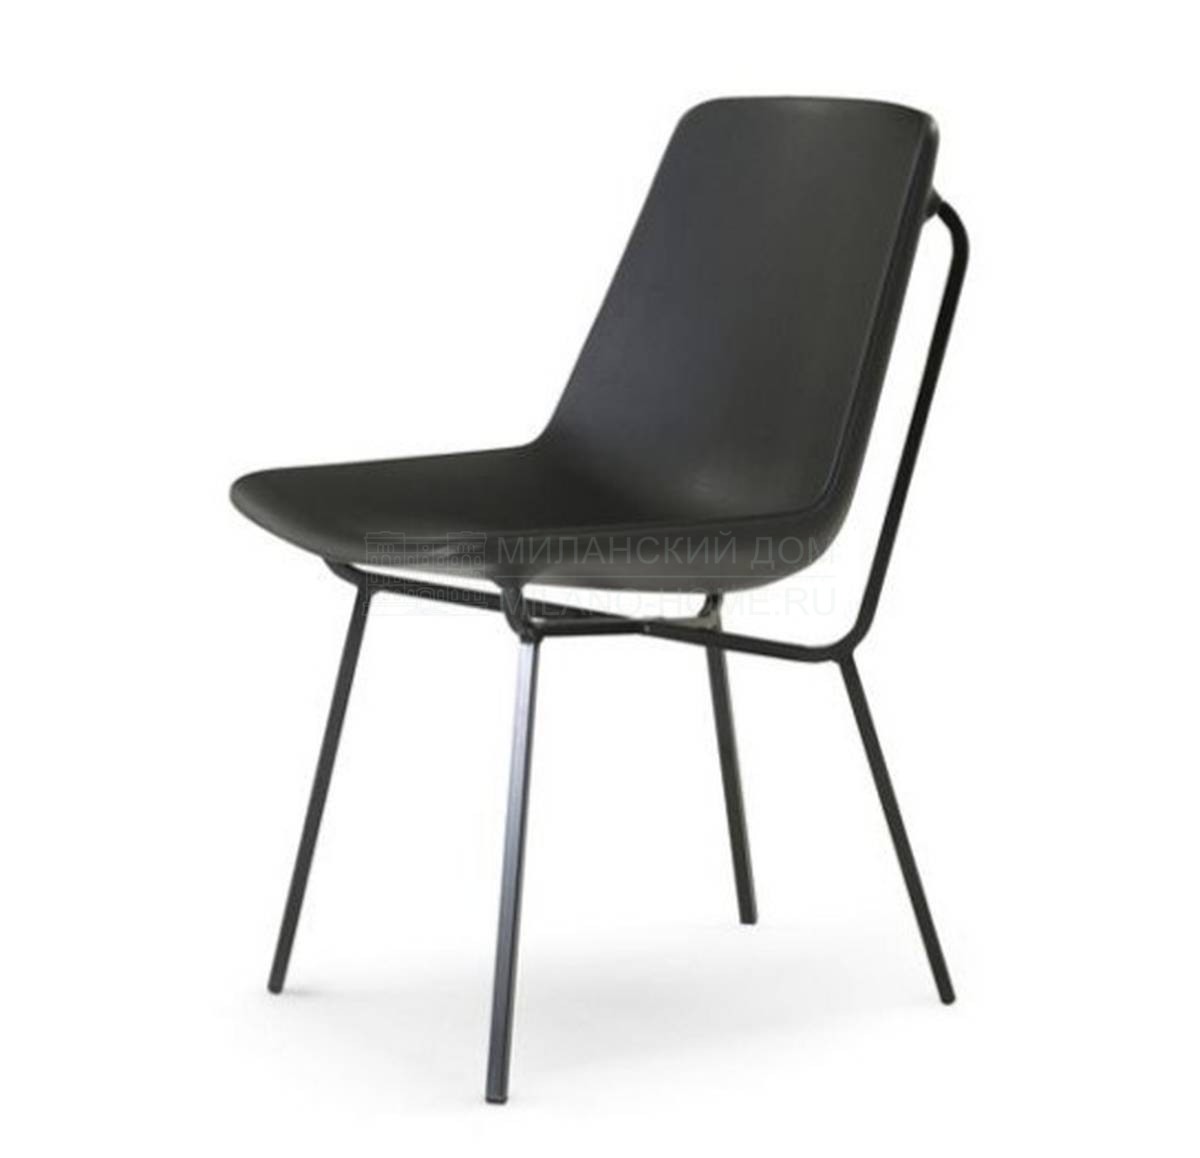 Металлический / Пластиковый стул Stiletto chair из Франции фабрики ROCHE BOBOIS